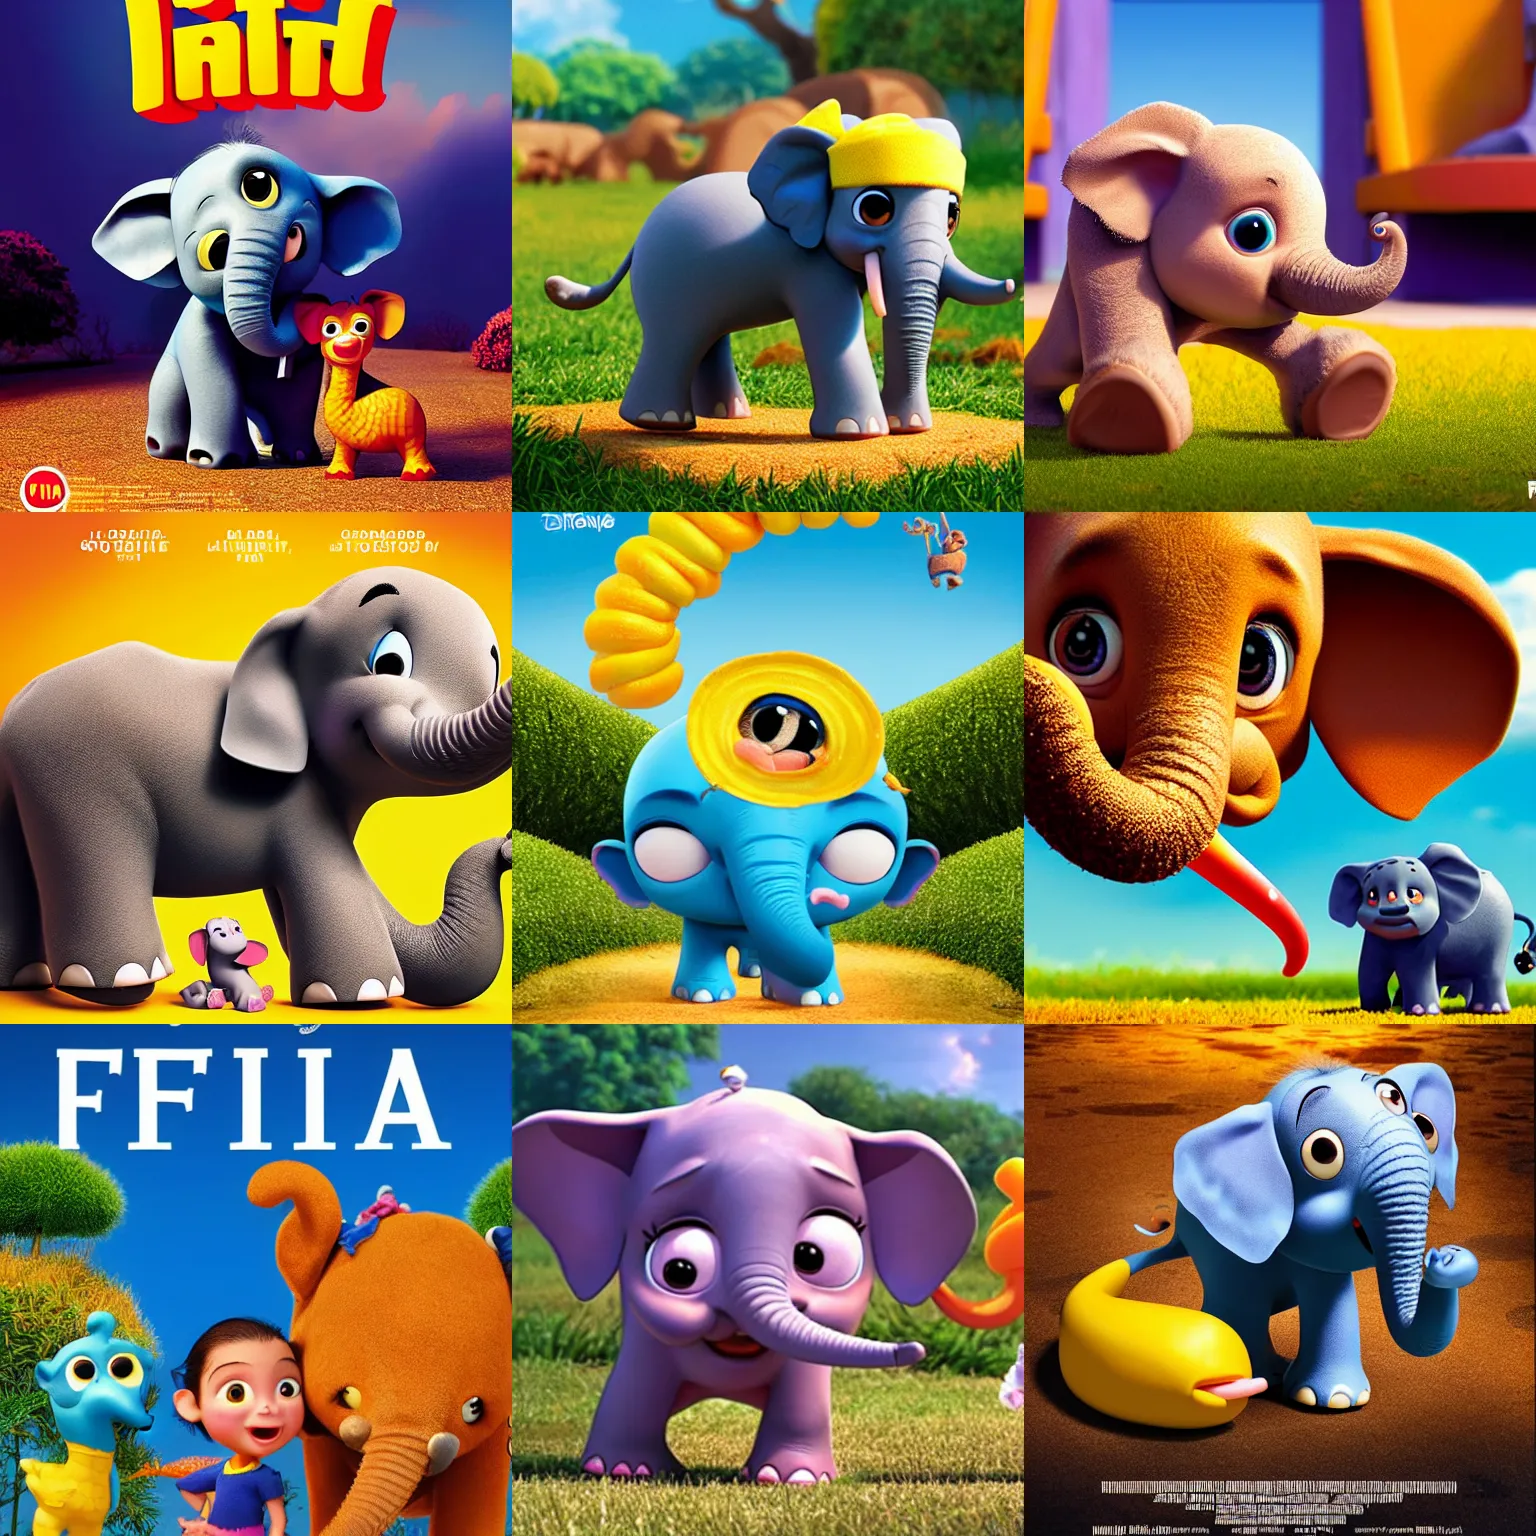 Prompt: frita the baby elephant, pixar movie poster